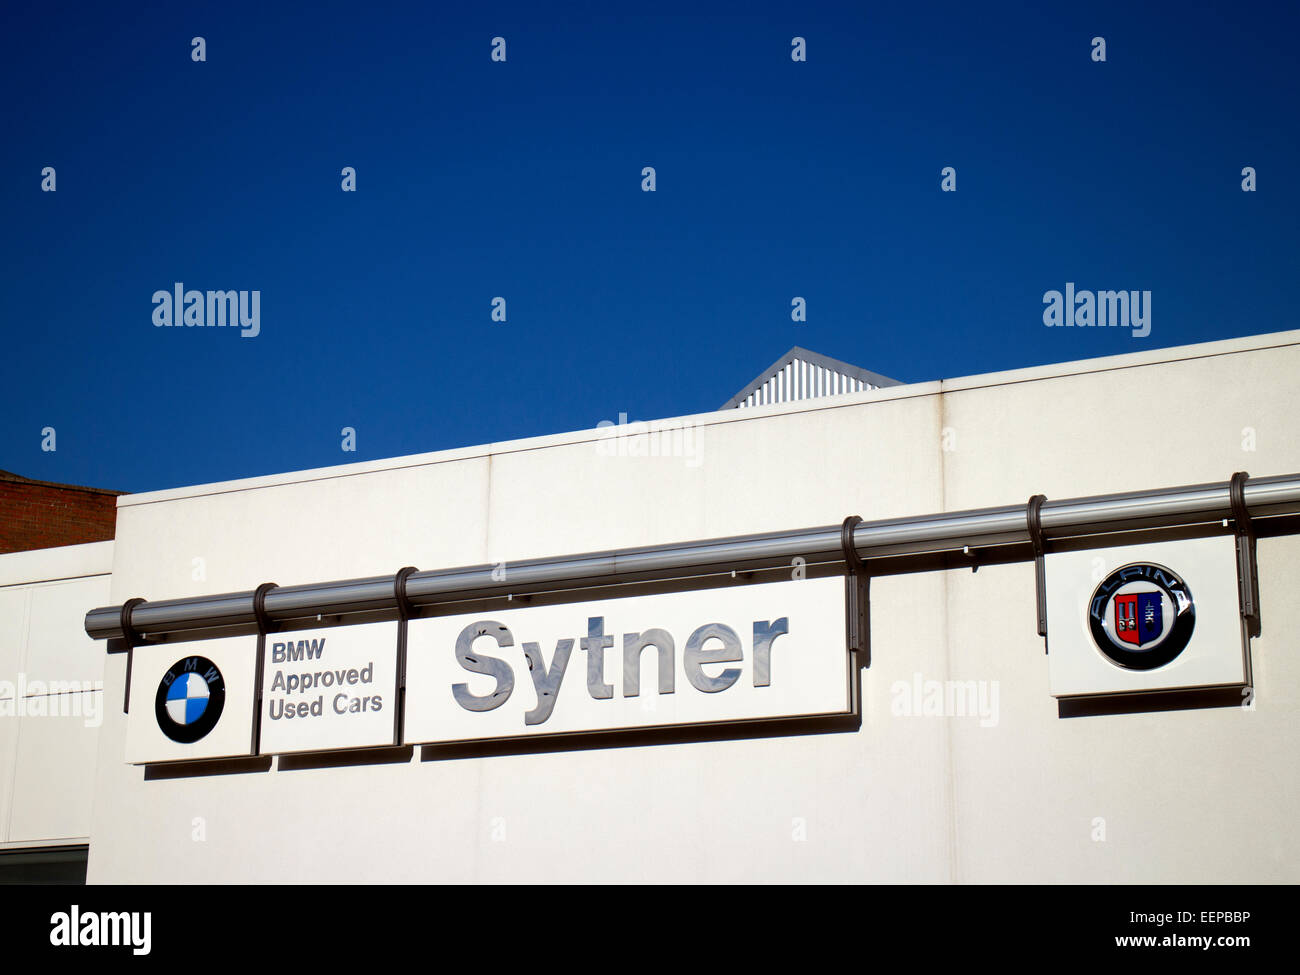 Sytner BMW car dealership, Birmingham, UK Stock Photo